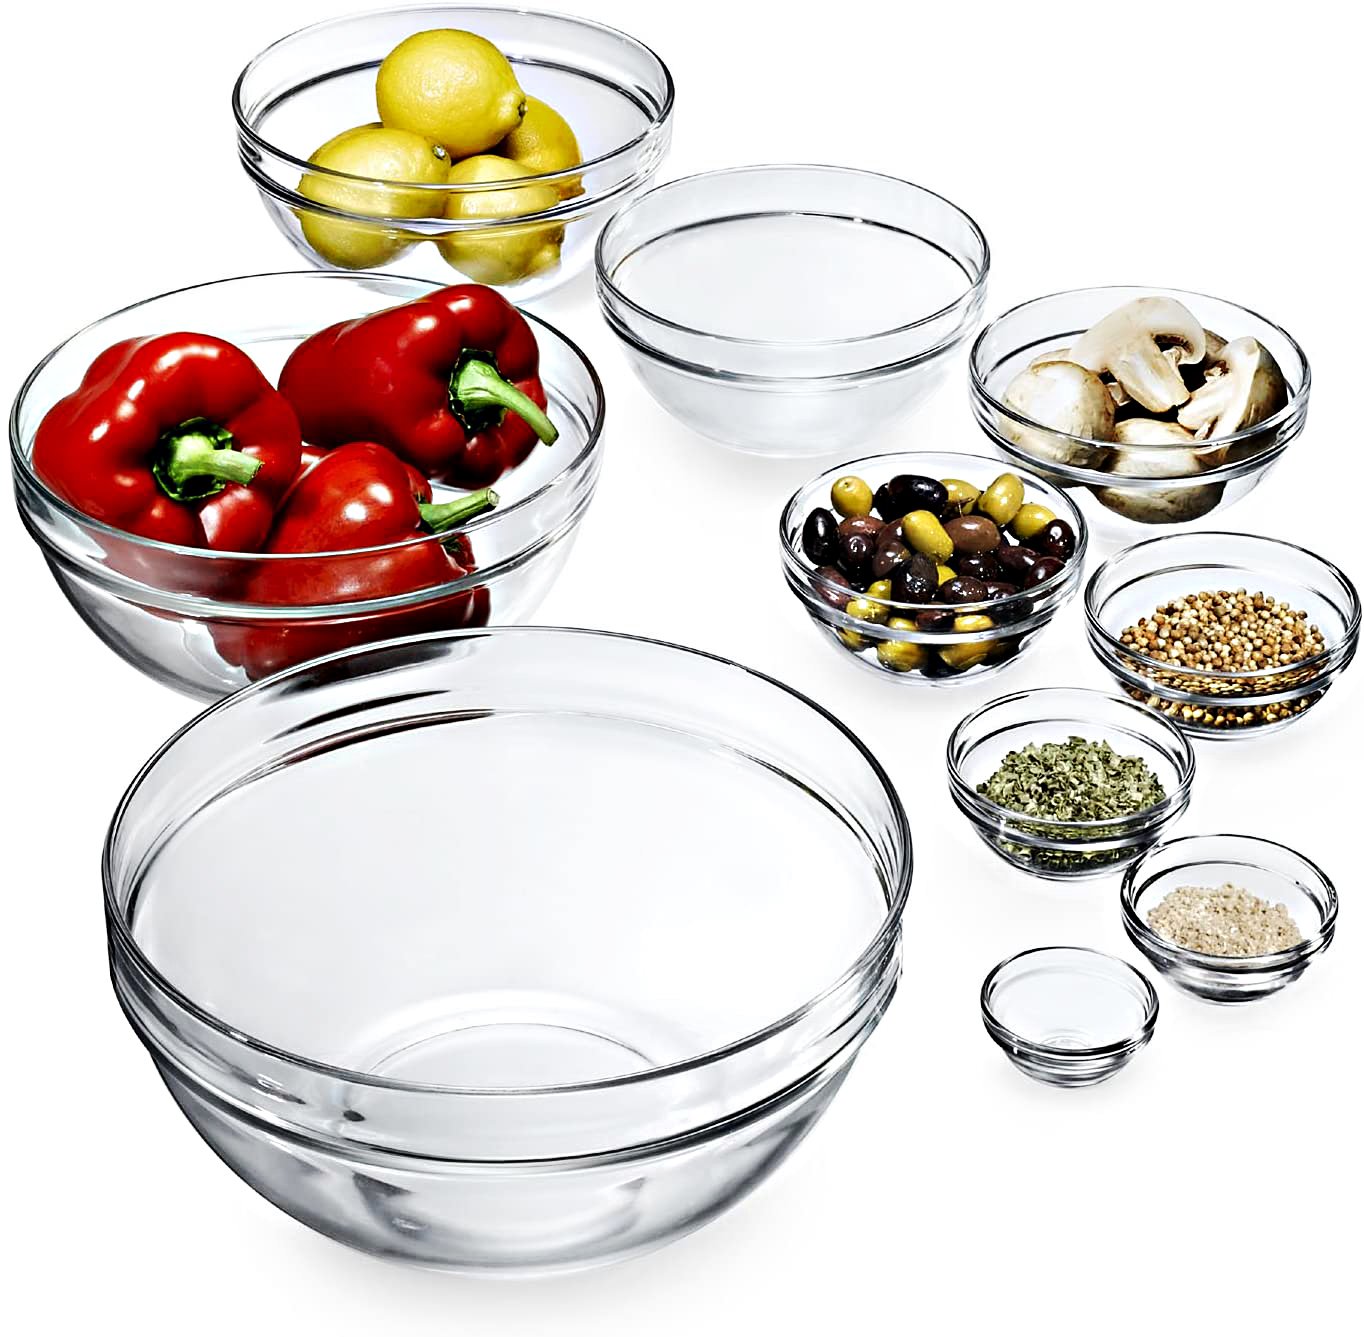 Luminarc Stackable Glass Bowl 10-Piece Set